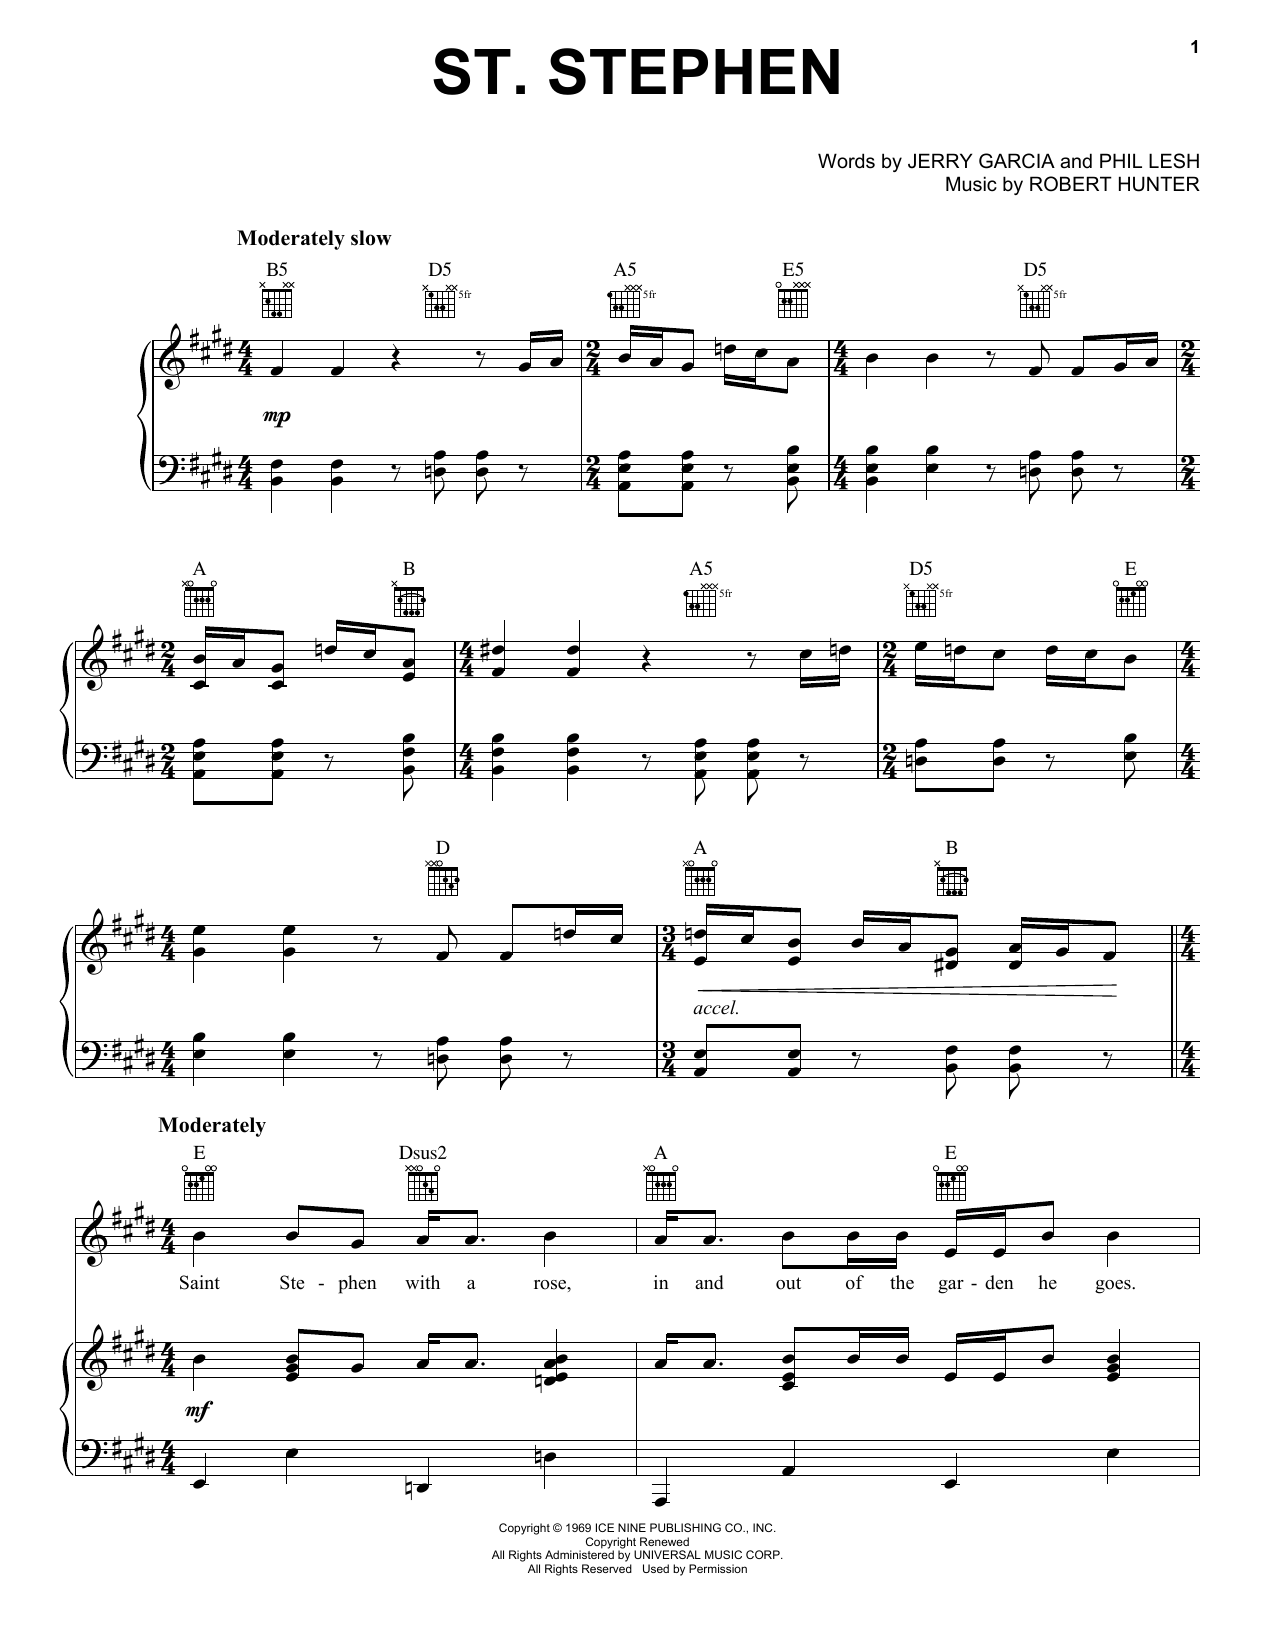 Grateful Dead St. Stephen Sheet Music Notes & Chords for Guitar Tab - Download or Print PDF